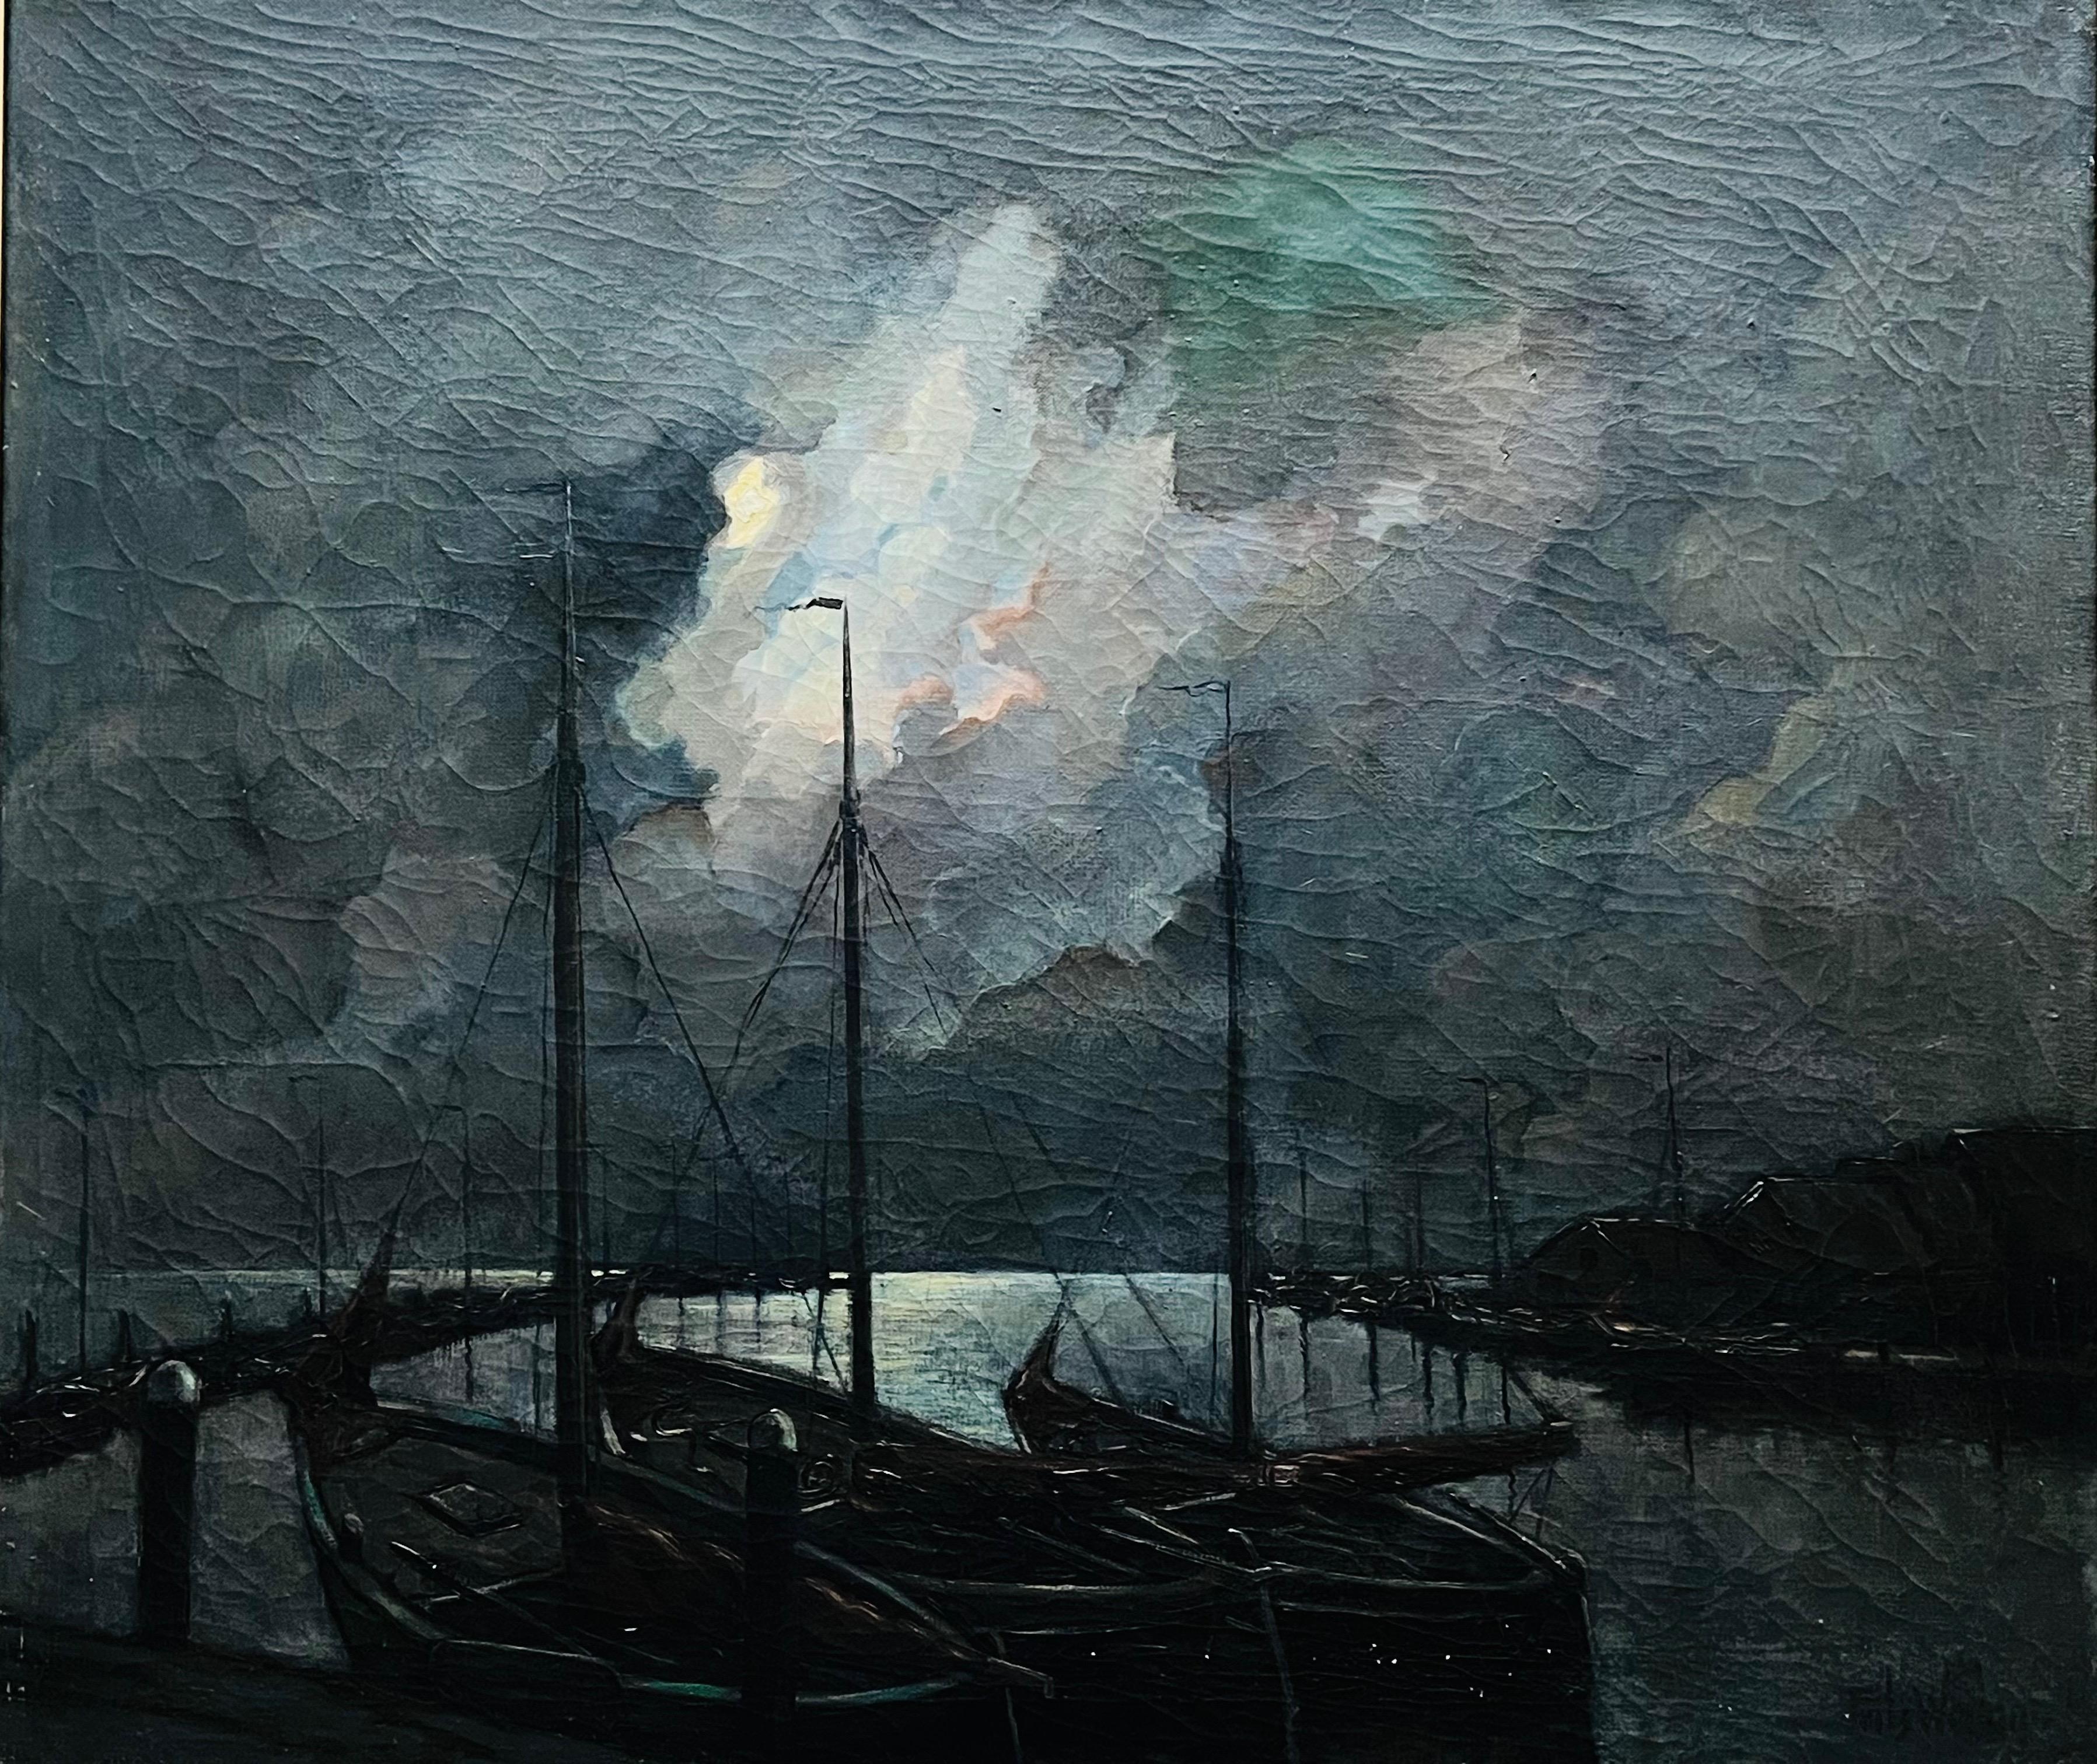 Frits Weiland (1888-1950) "Przystań rybacka nocą"